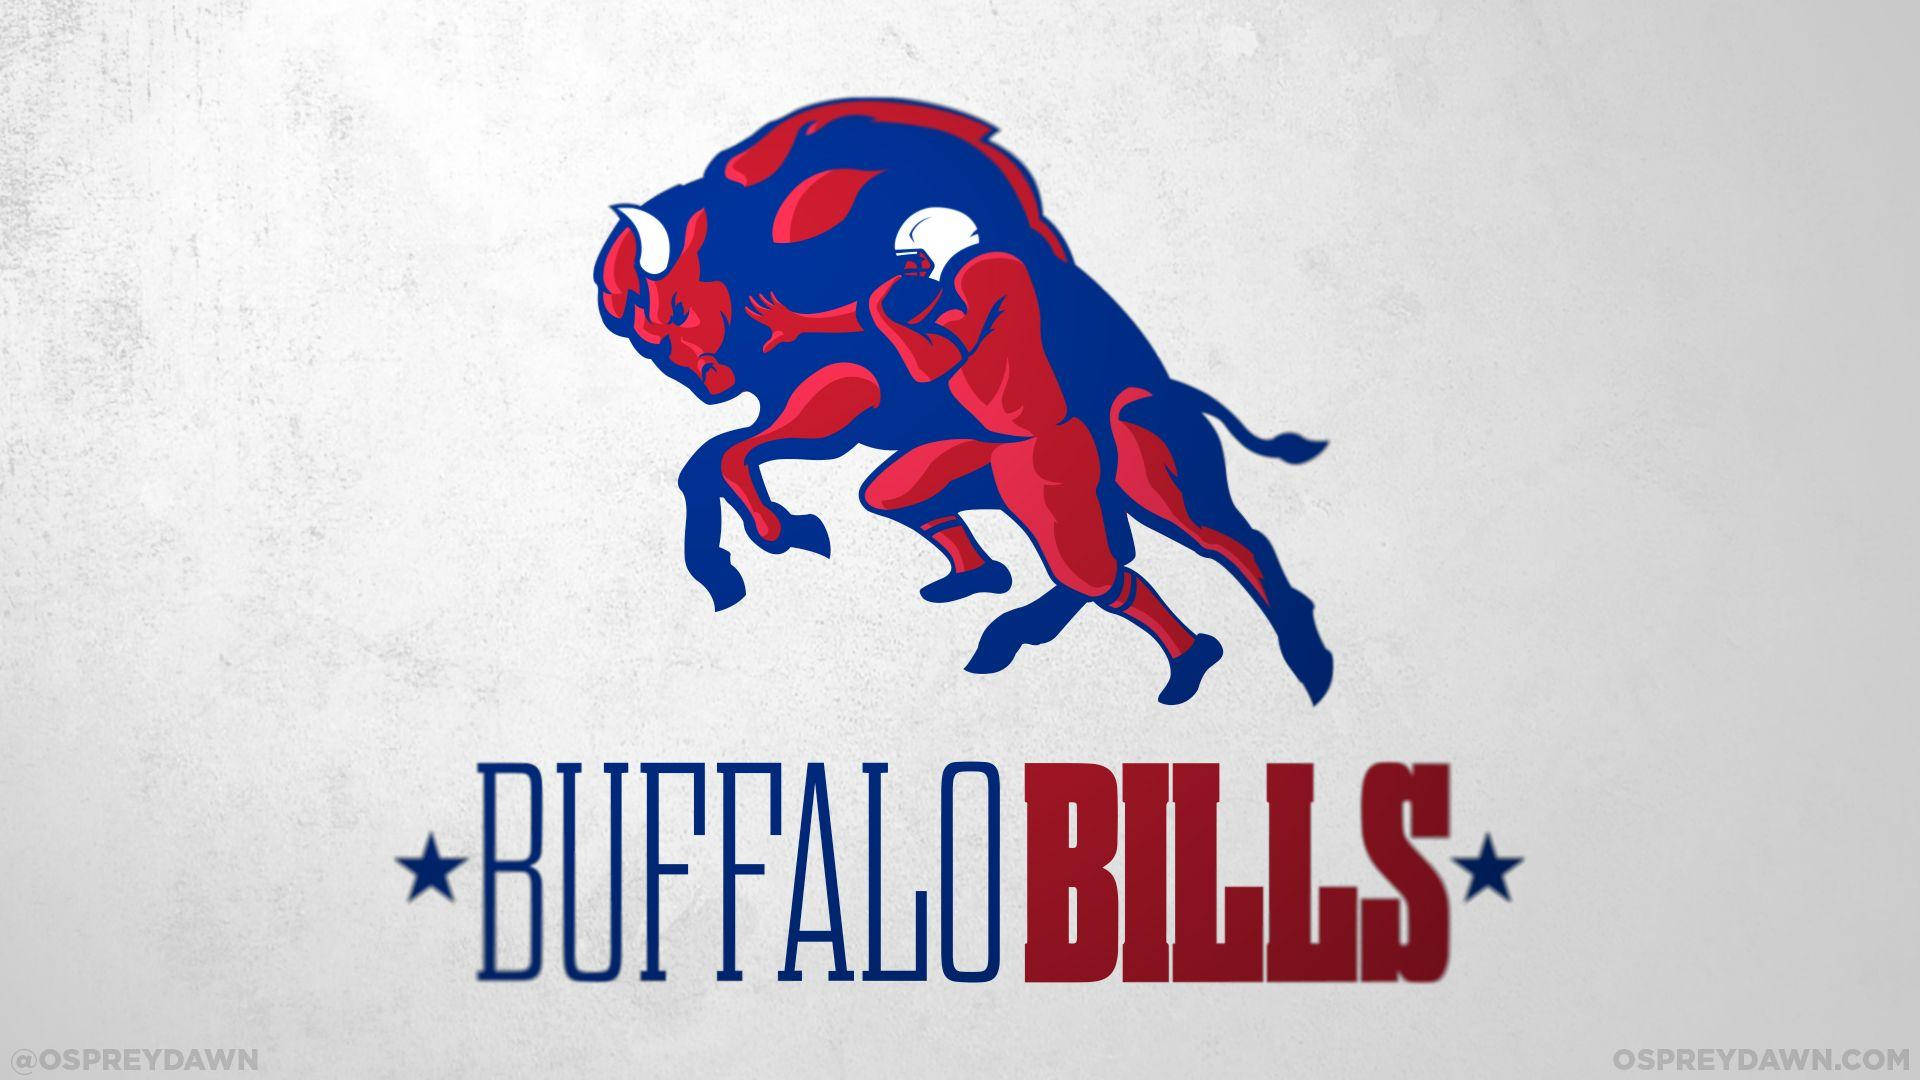 Buffalo Bills 1920X1080 Wallpaper and Background Image